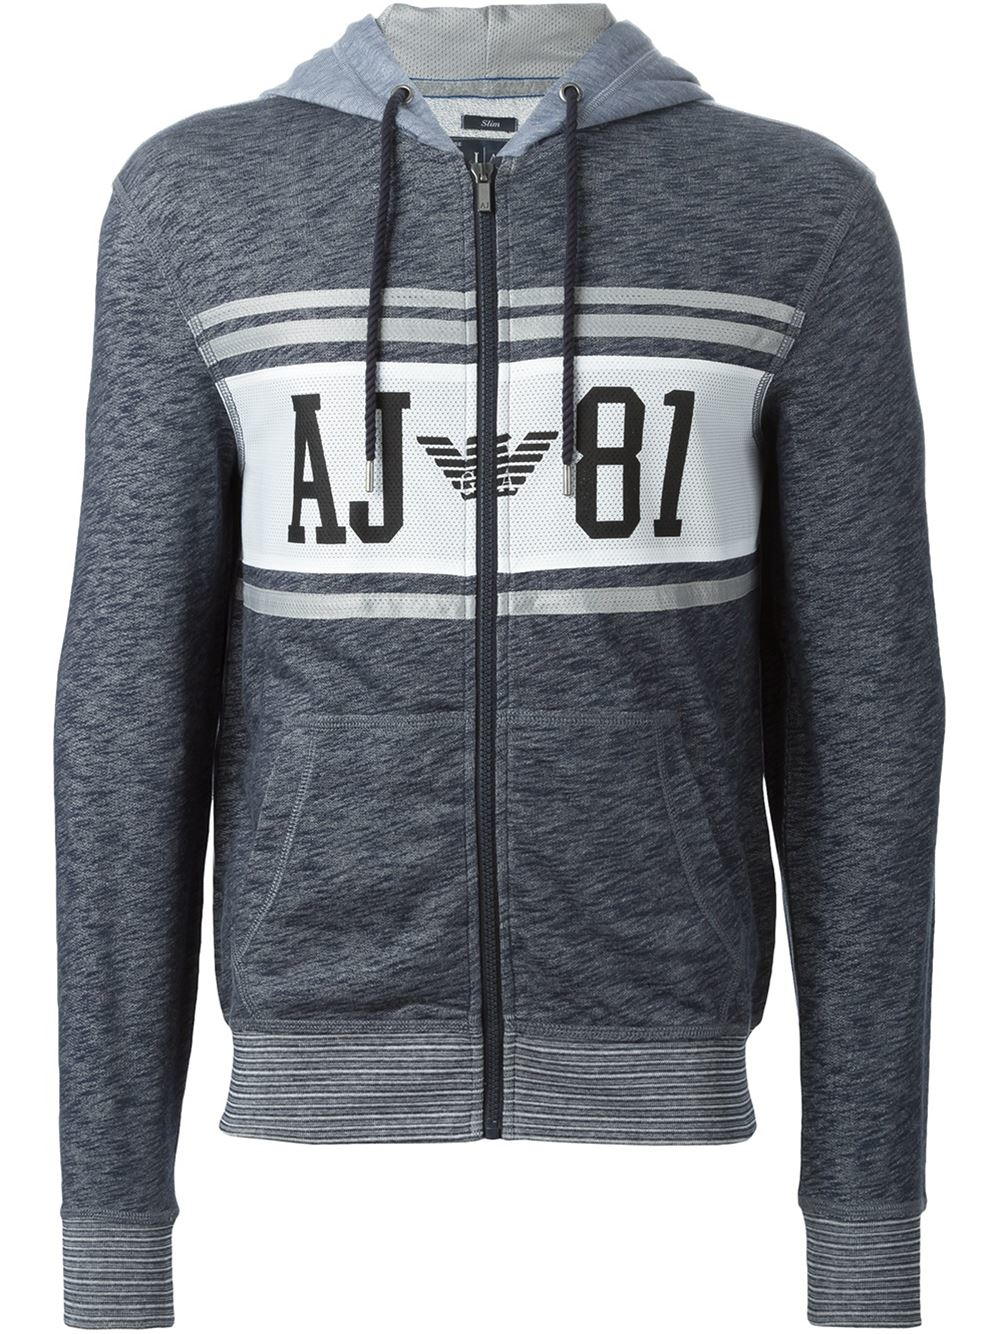 Armani Jeans Sweatshirt Mens Hot Sale, SAVE 35% - raptorunderlayment.com